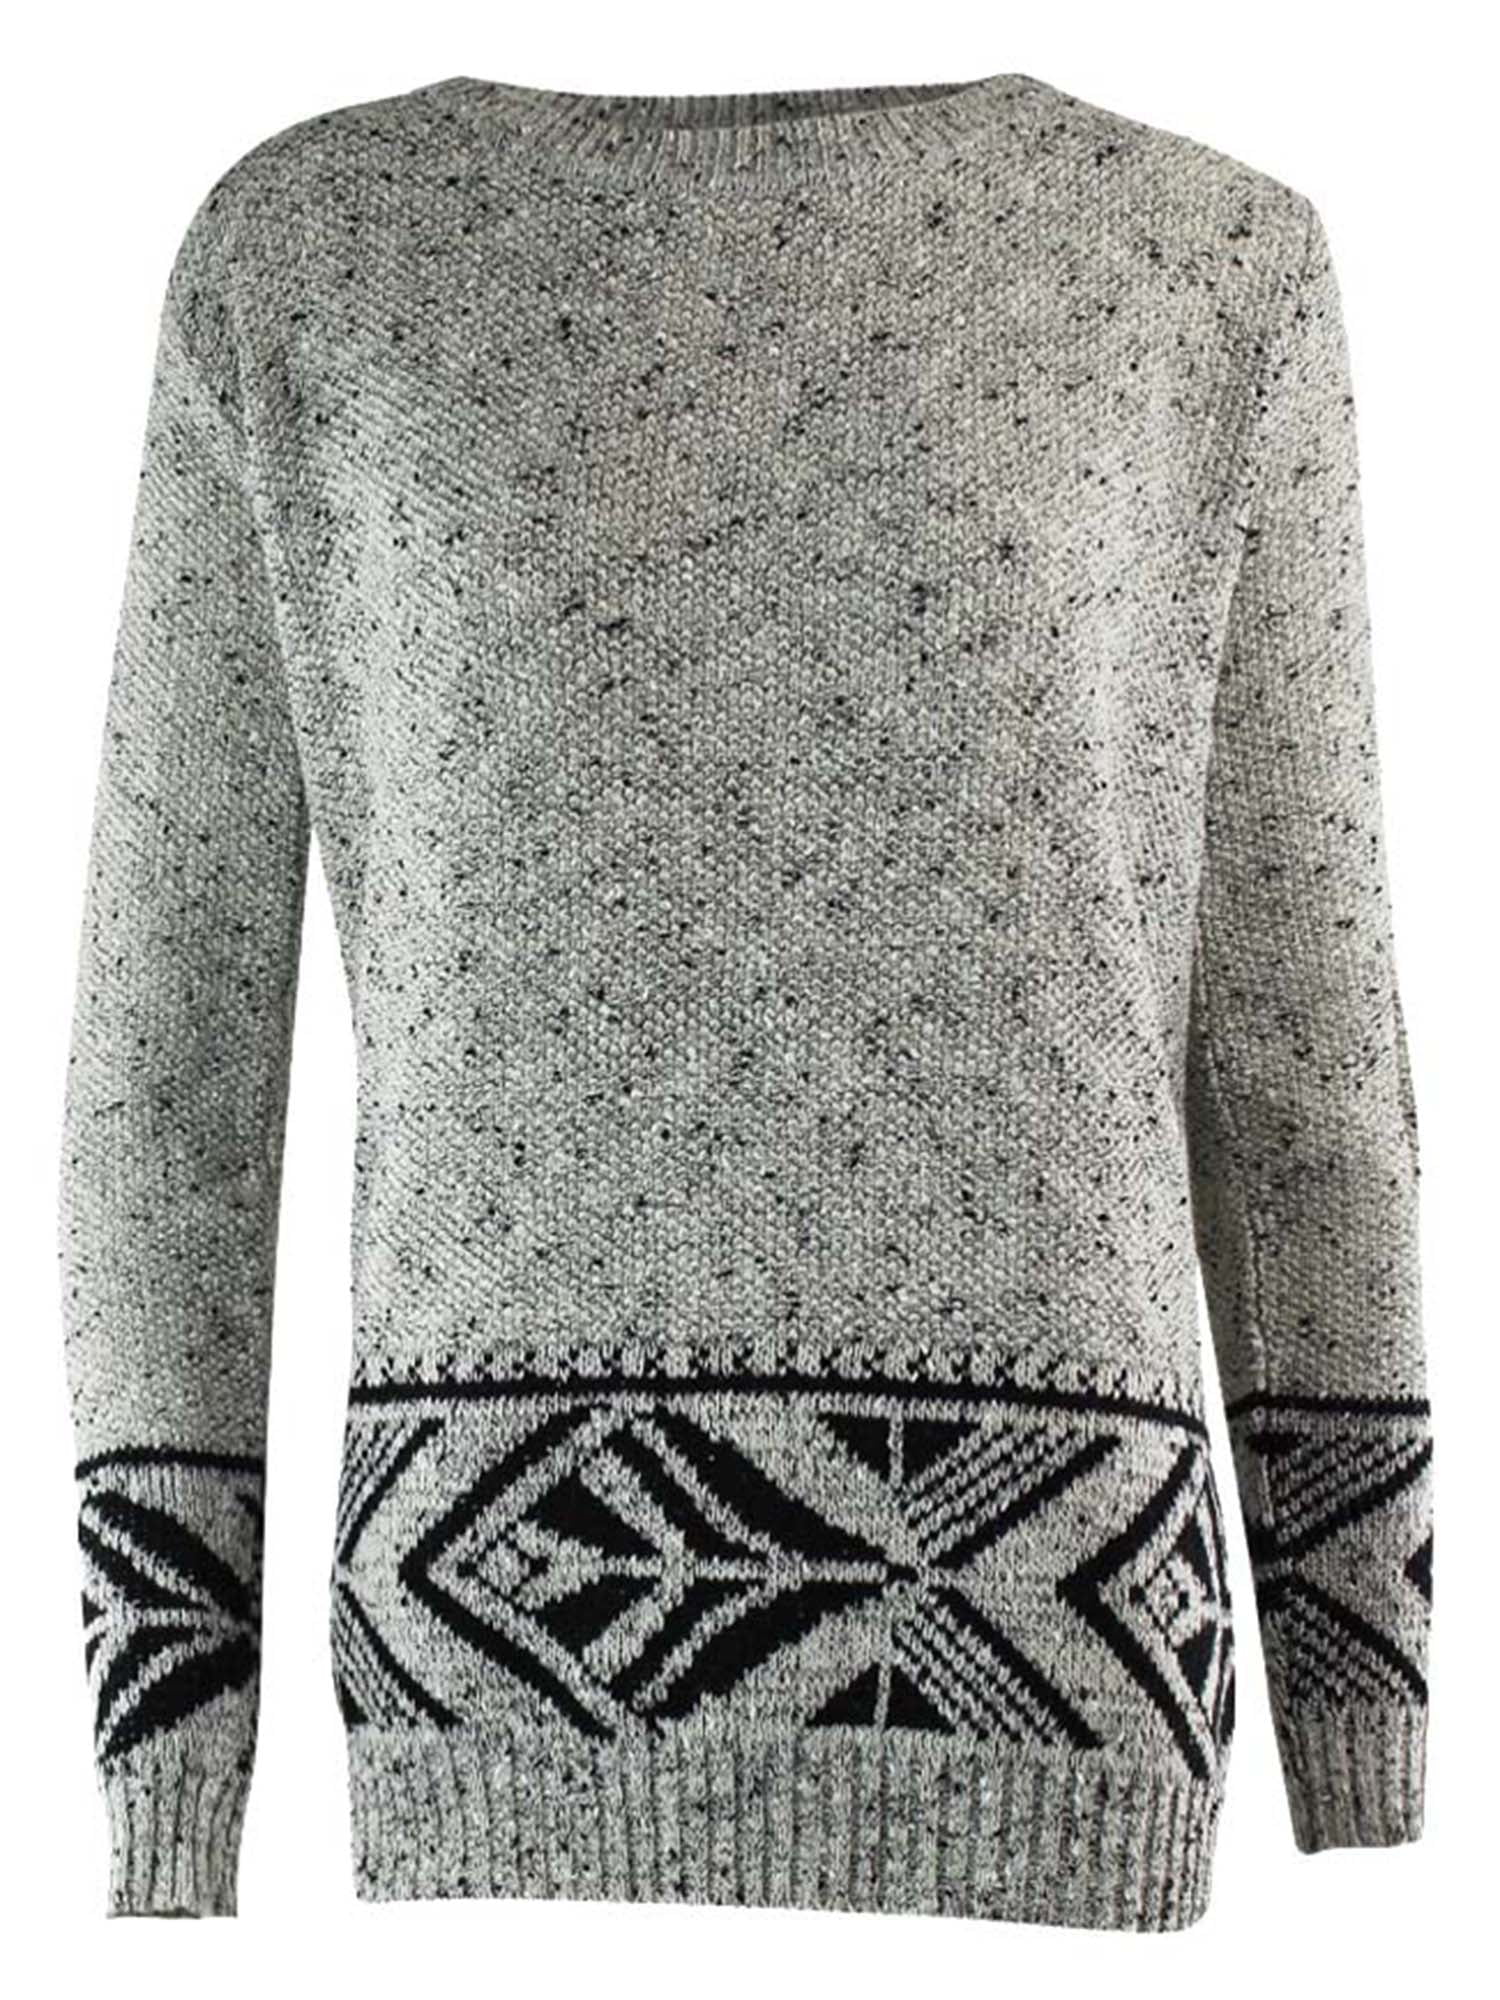 Luxury Divas - Marled Patterned Long Sweater - Walmart.com - Walmart.com